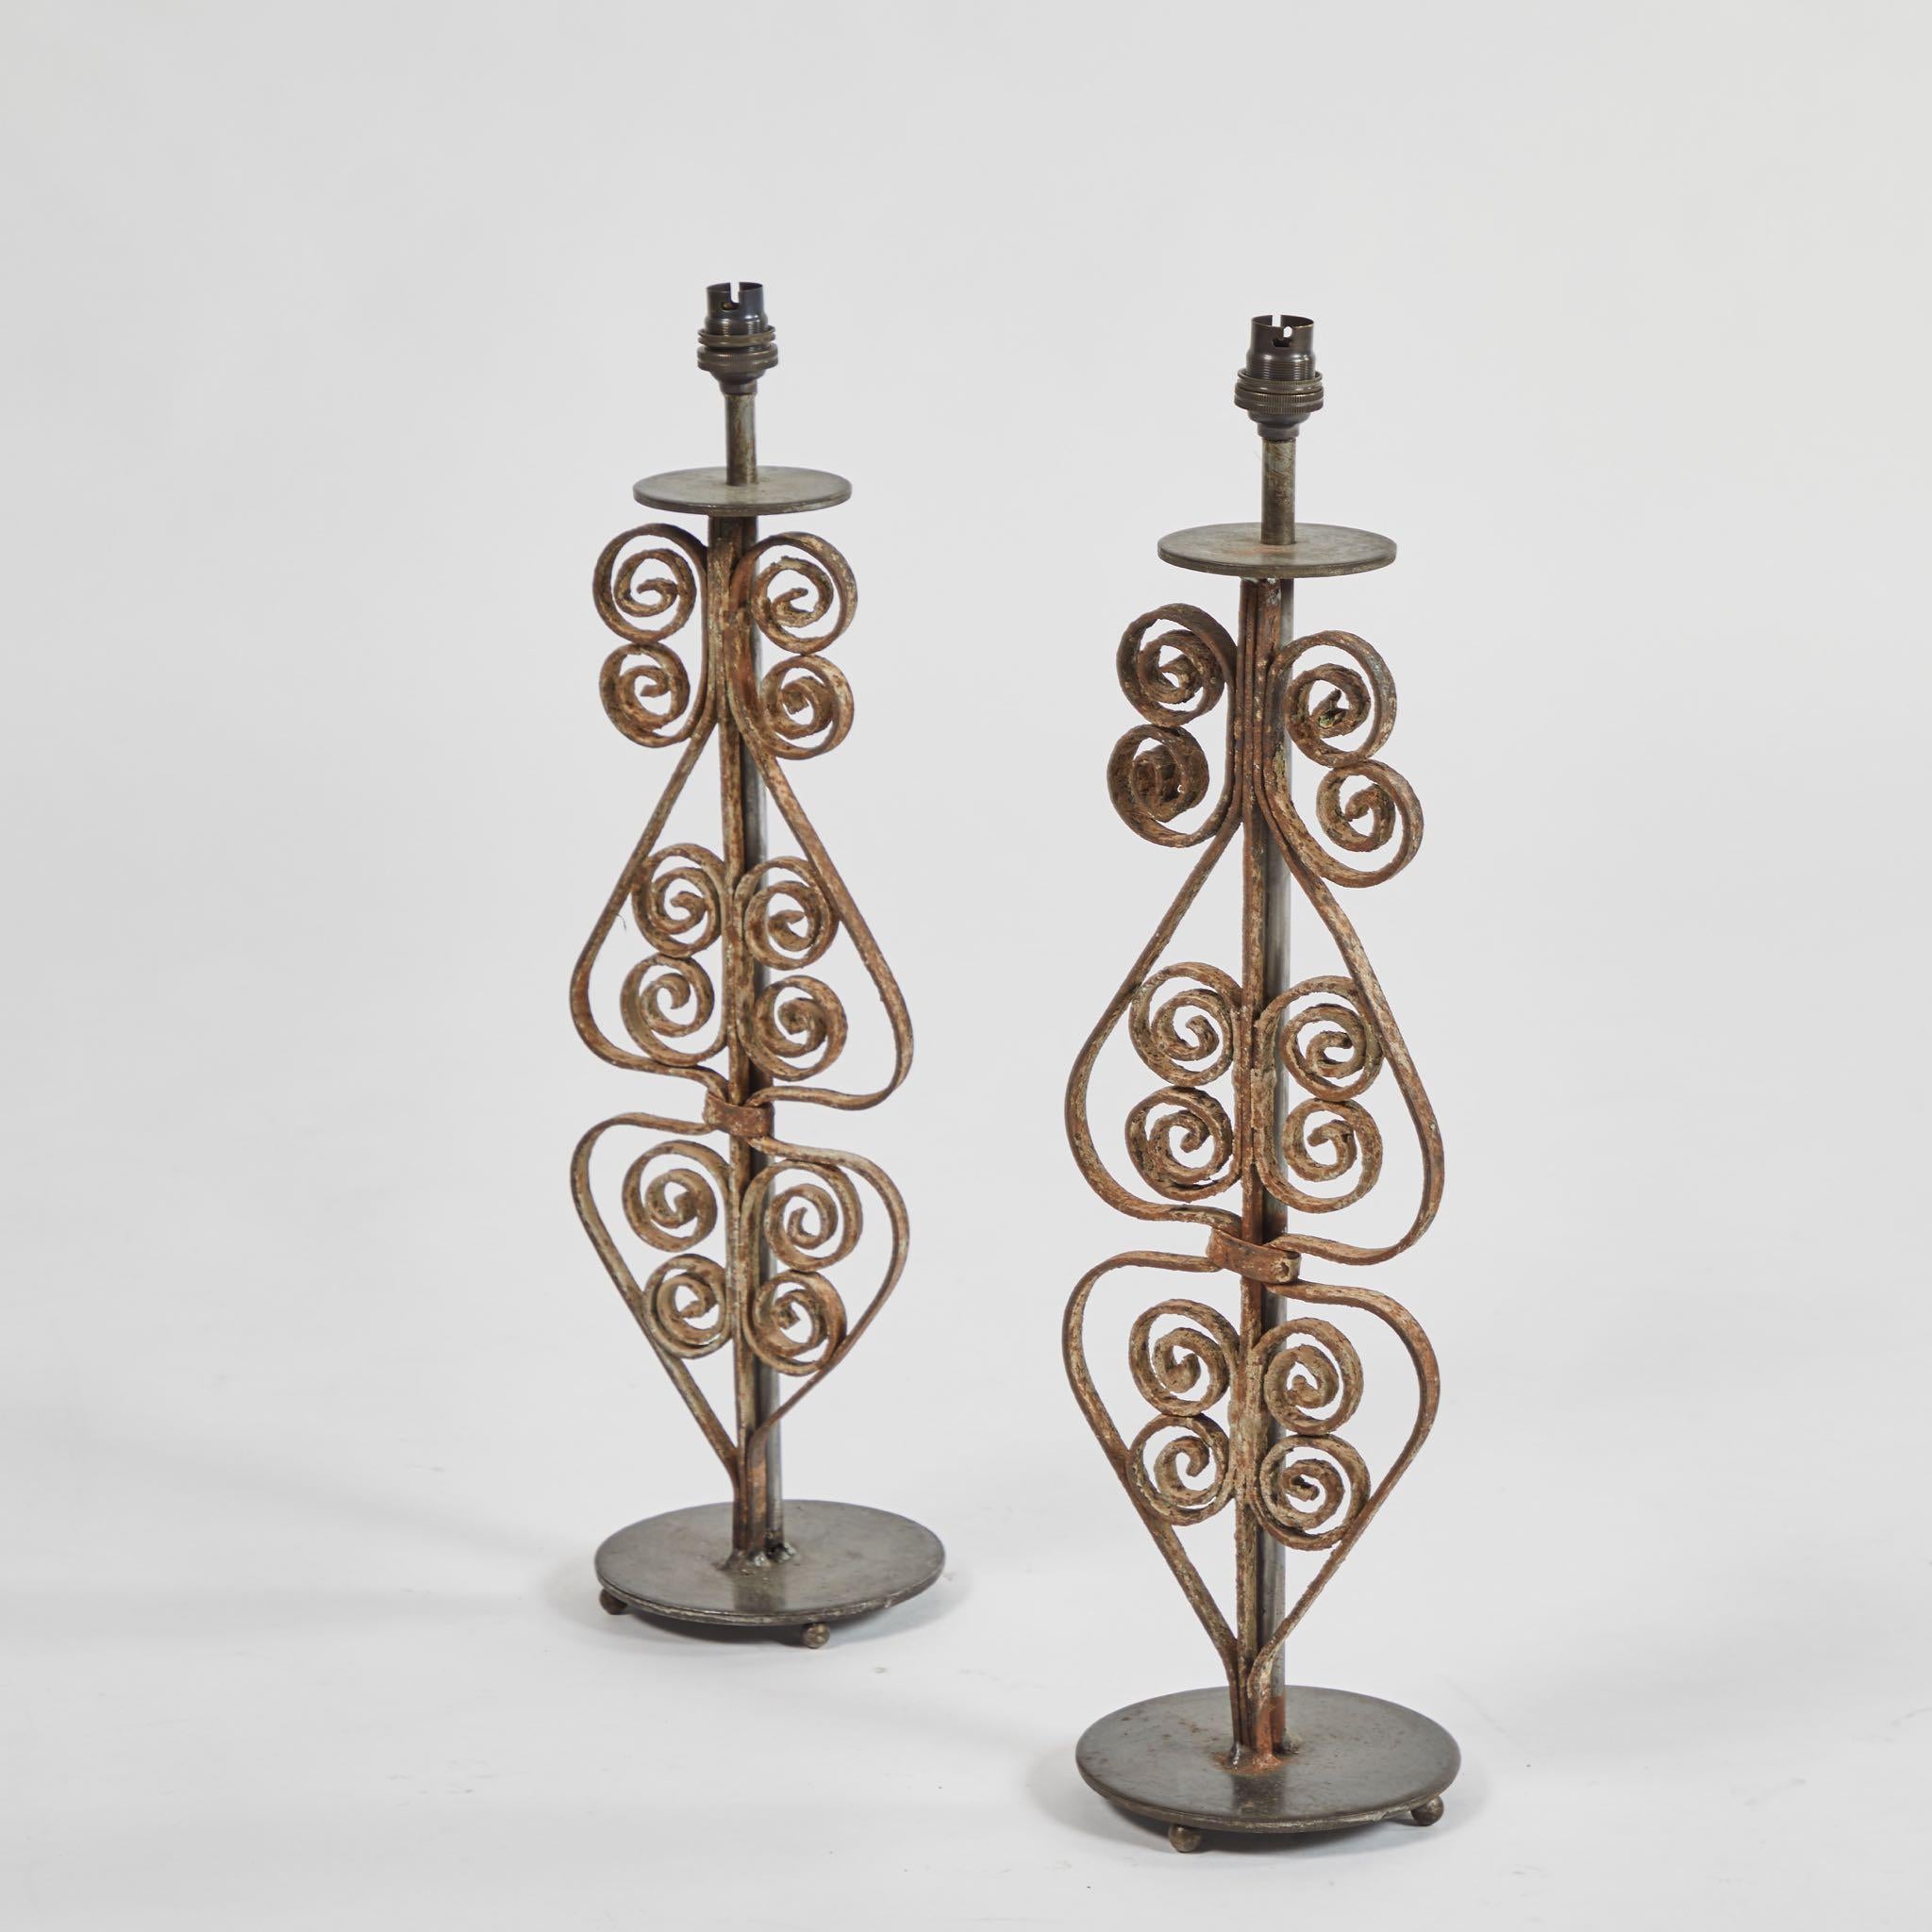 Pair of iron lamps with custom shades, originating in England, circa 1880.